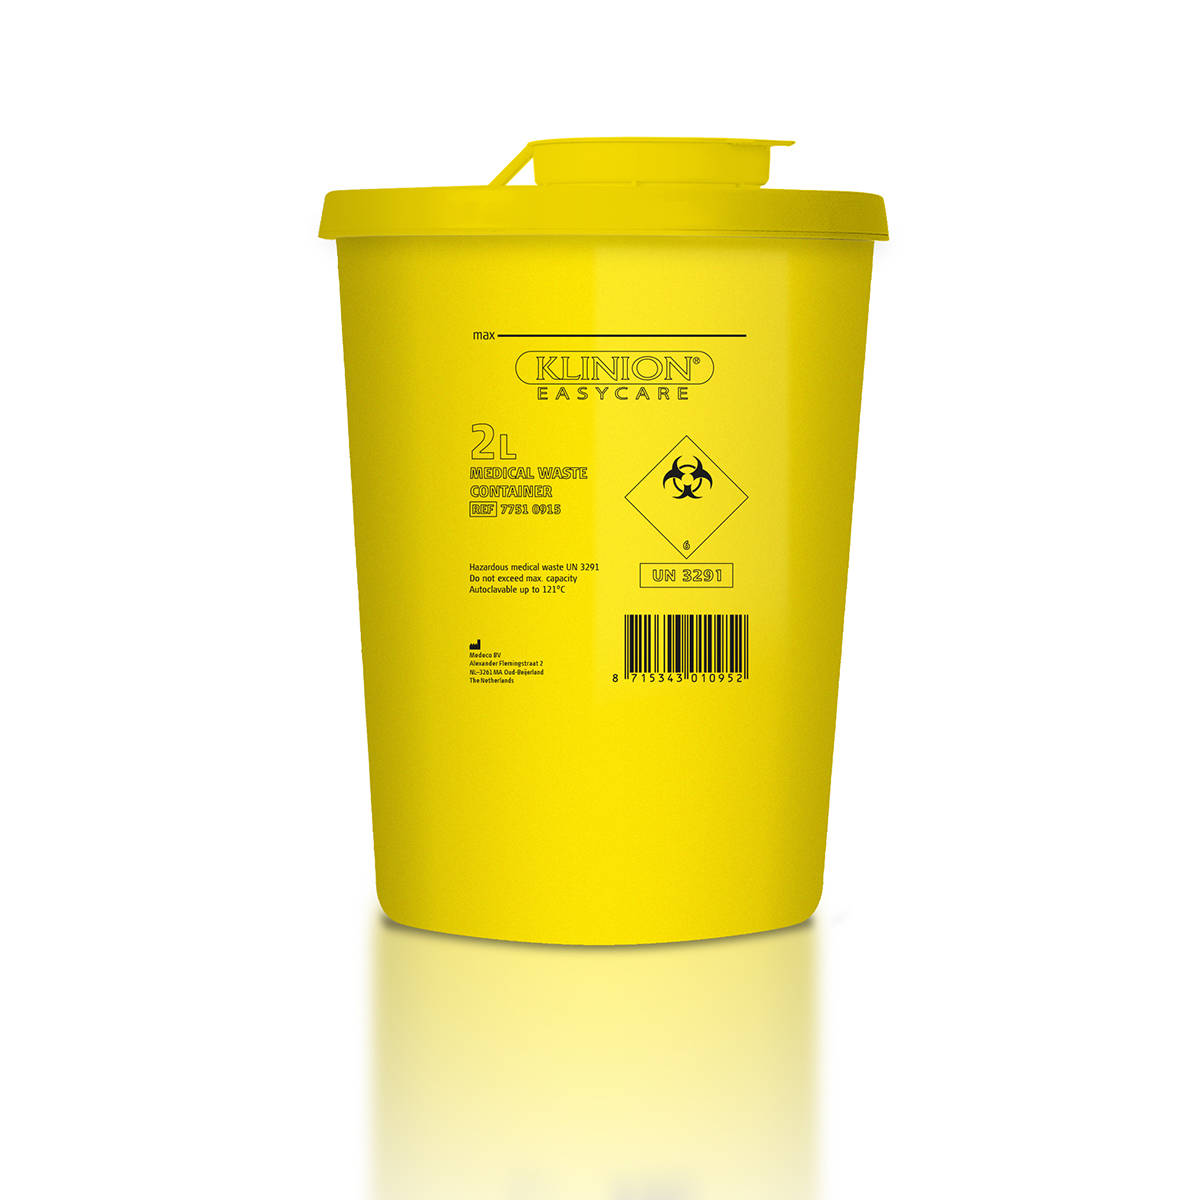 Medium-sized yellow sharps container